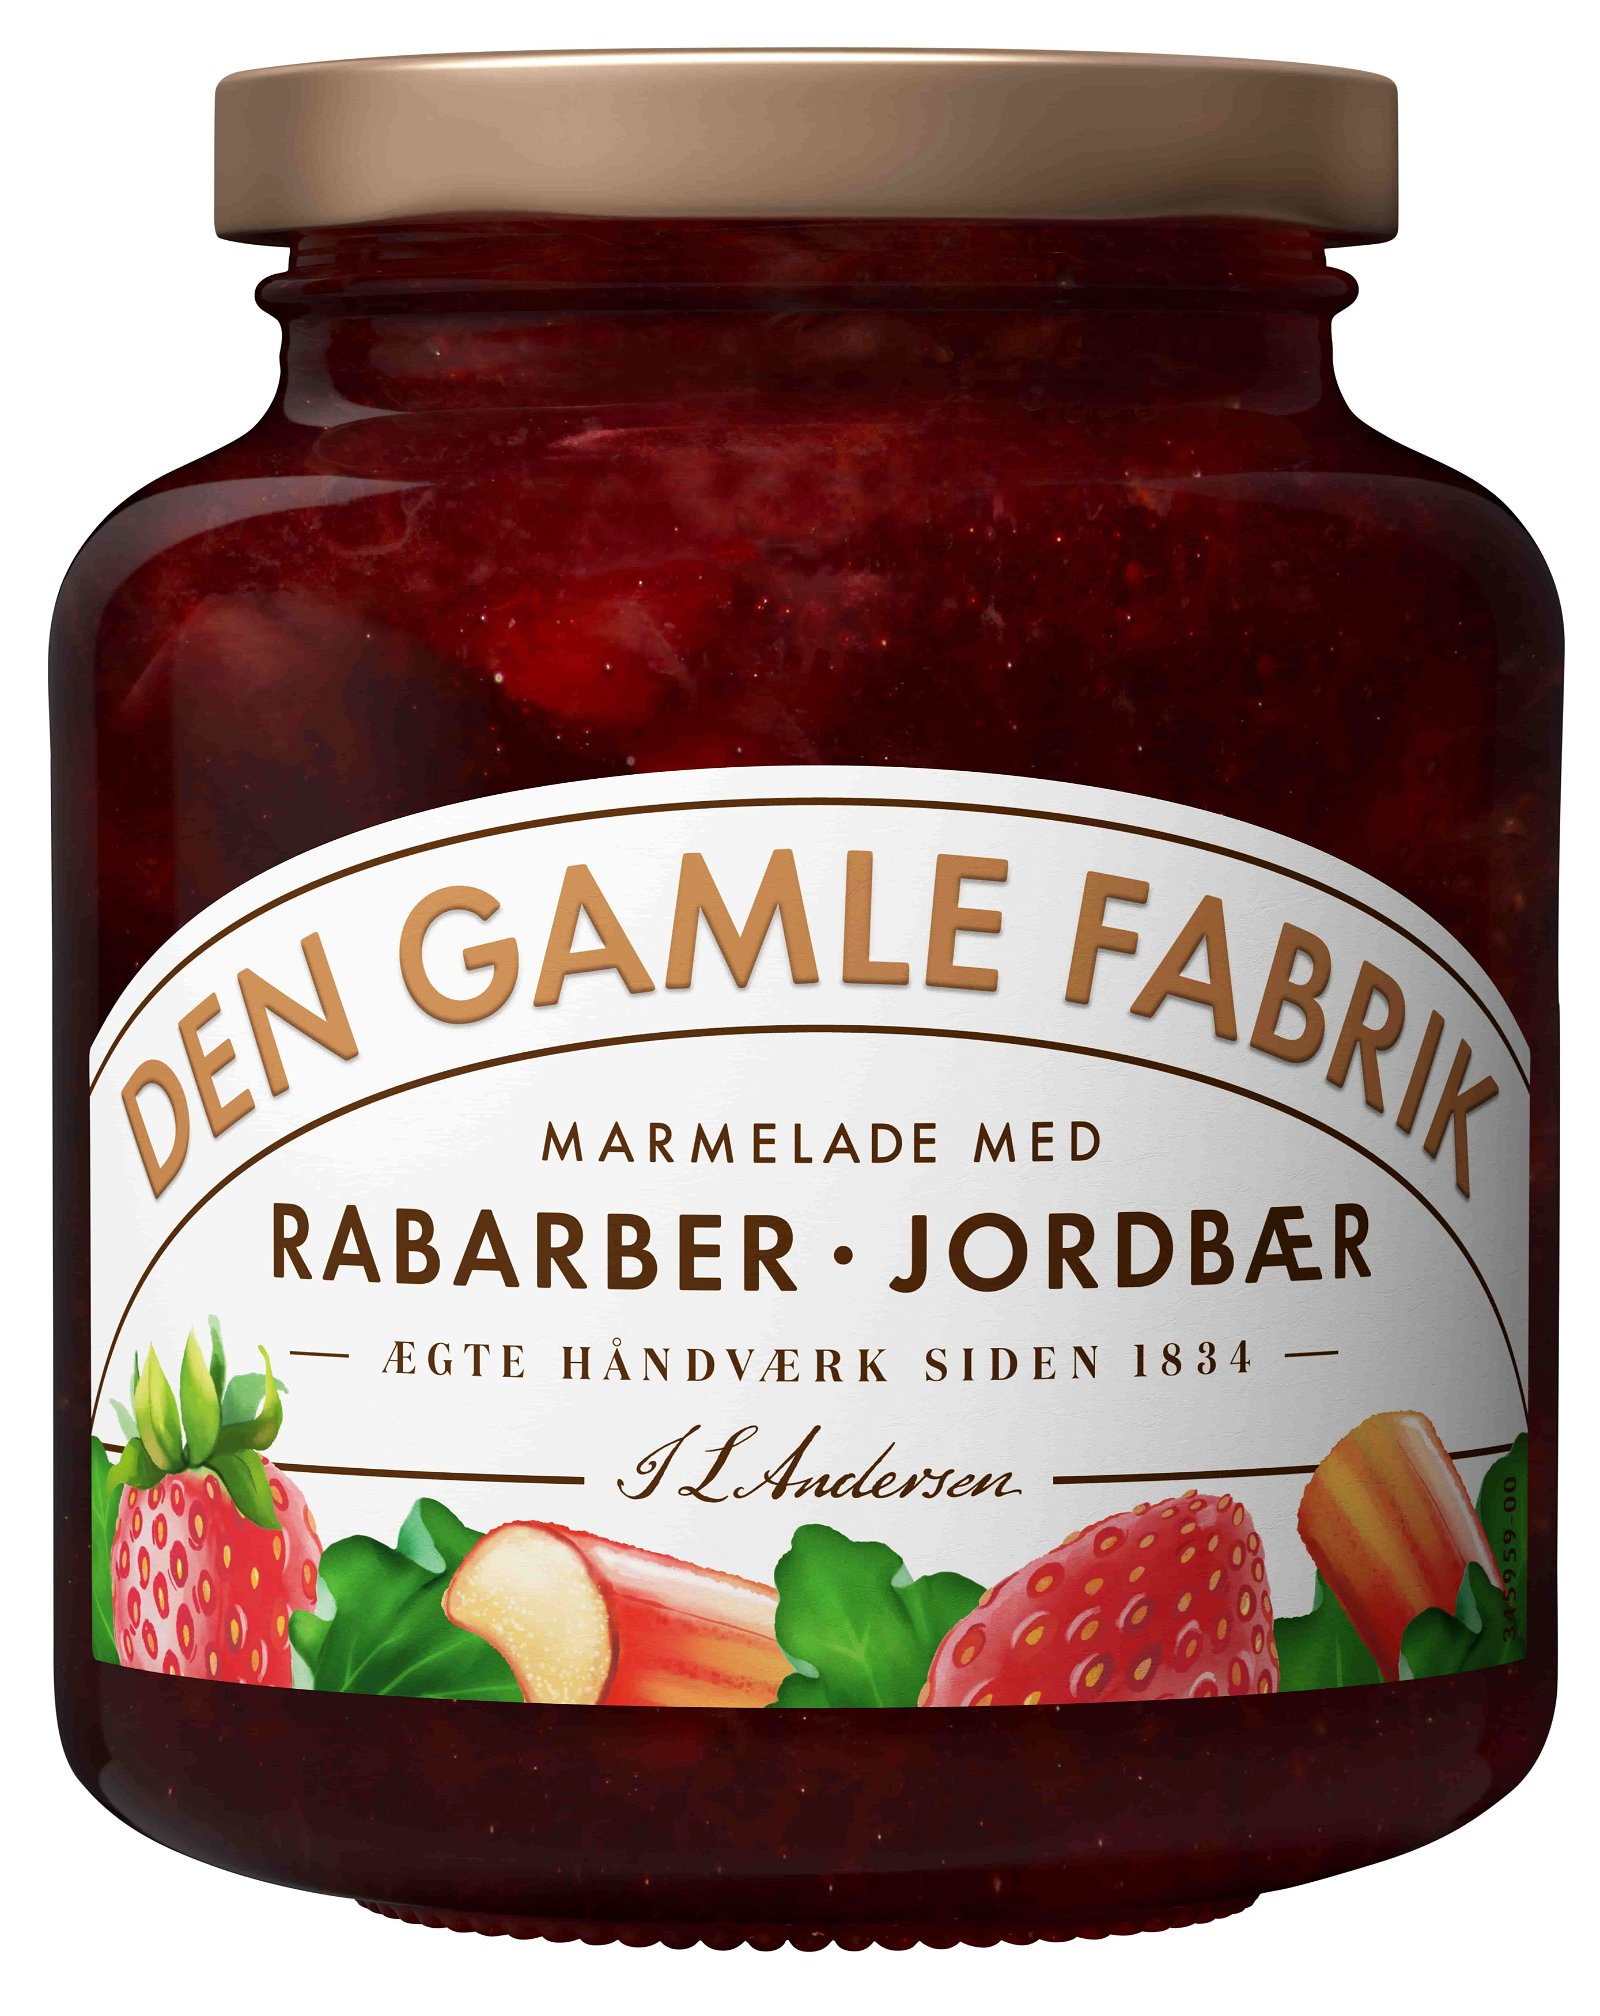 Den Gamle Fabrik strawberry and rhubarb jam, 380g